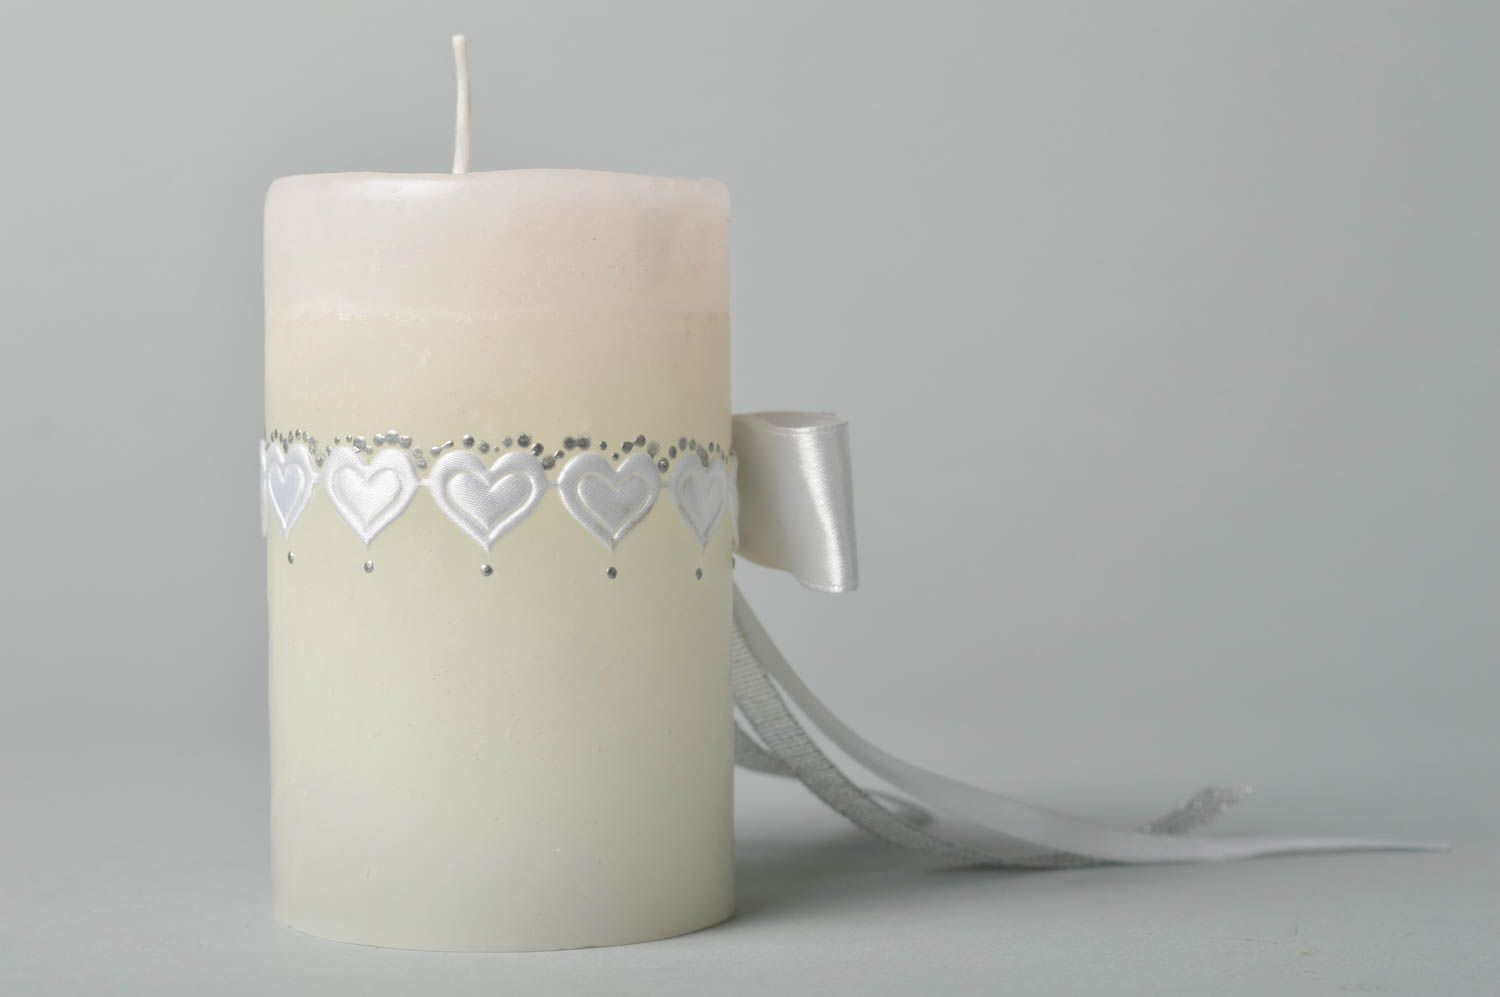 Handmade candle made of paraffin wedding accessories wedding decor ideas photo 2